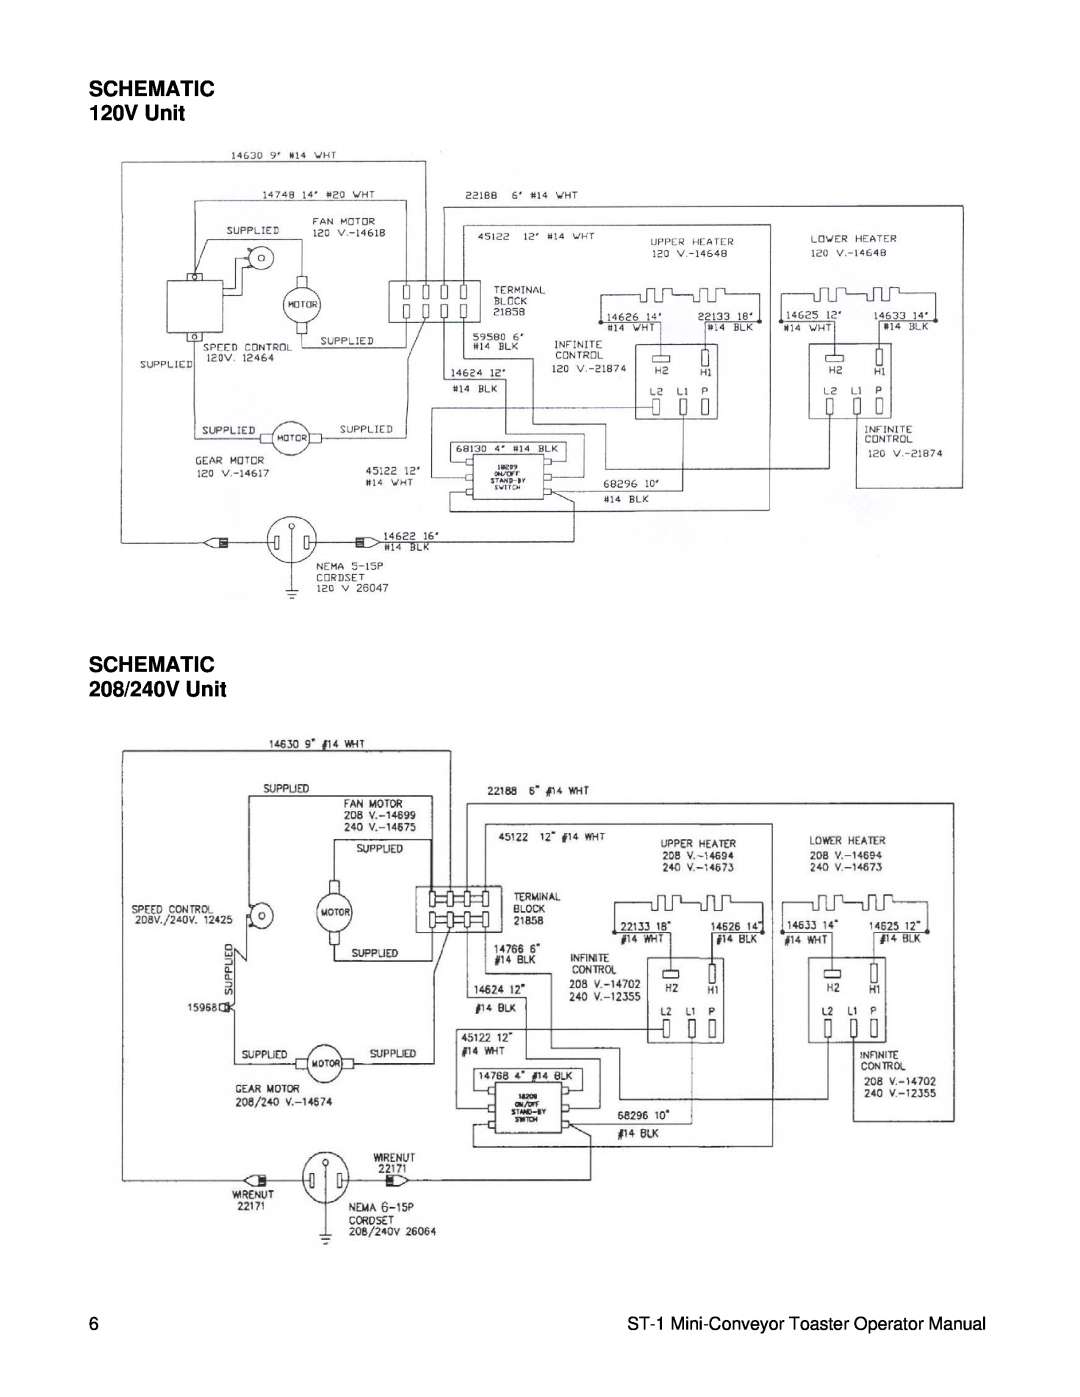 Lincoln specifications SCHEMATIC 120V Unit SCHEMATIC 208/240V Unit, ST-1 Mini-ConveyorToaster Operator Manual 